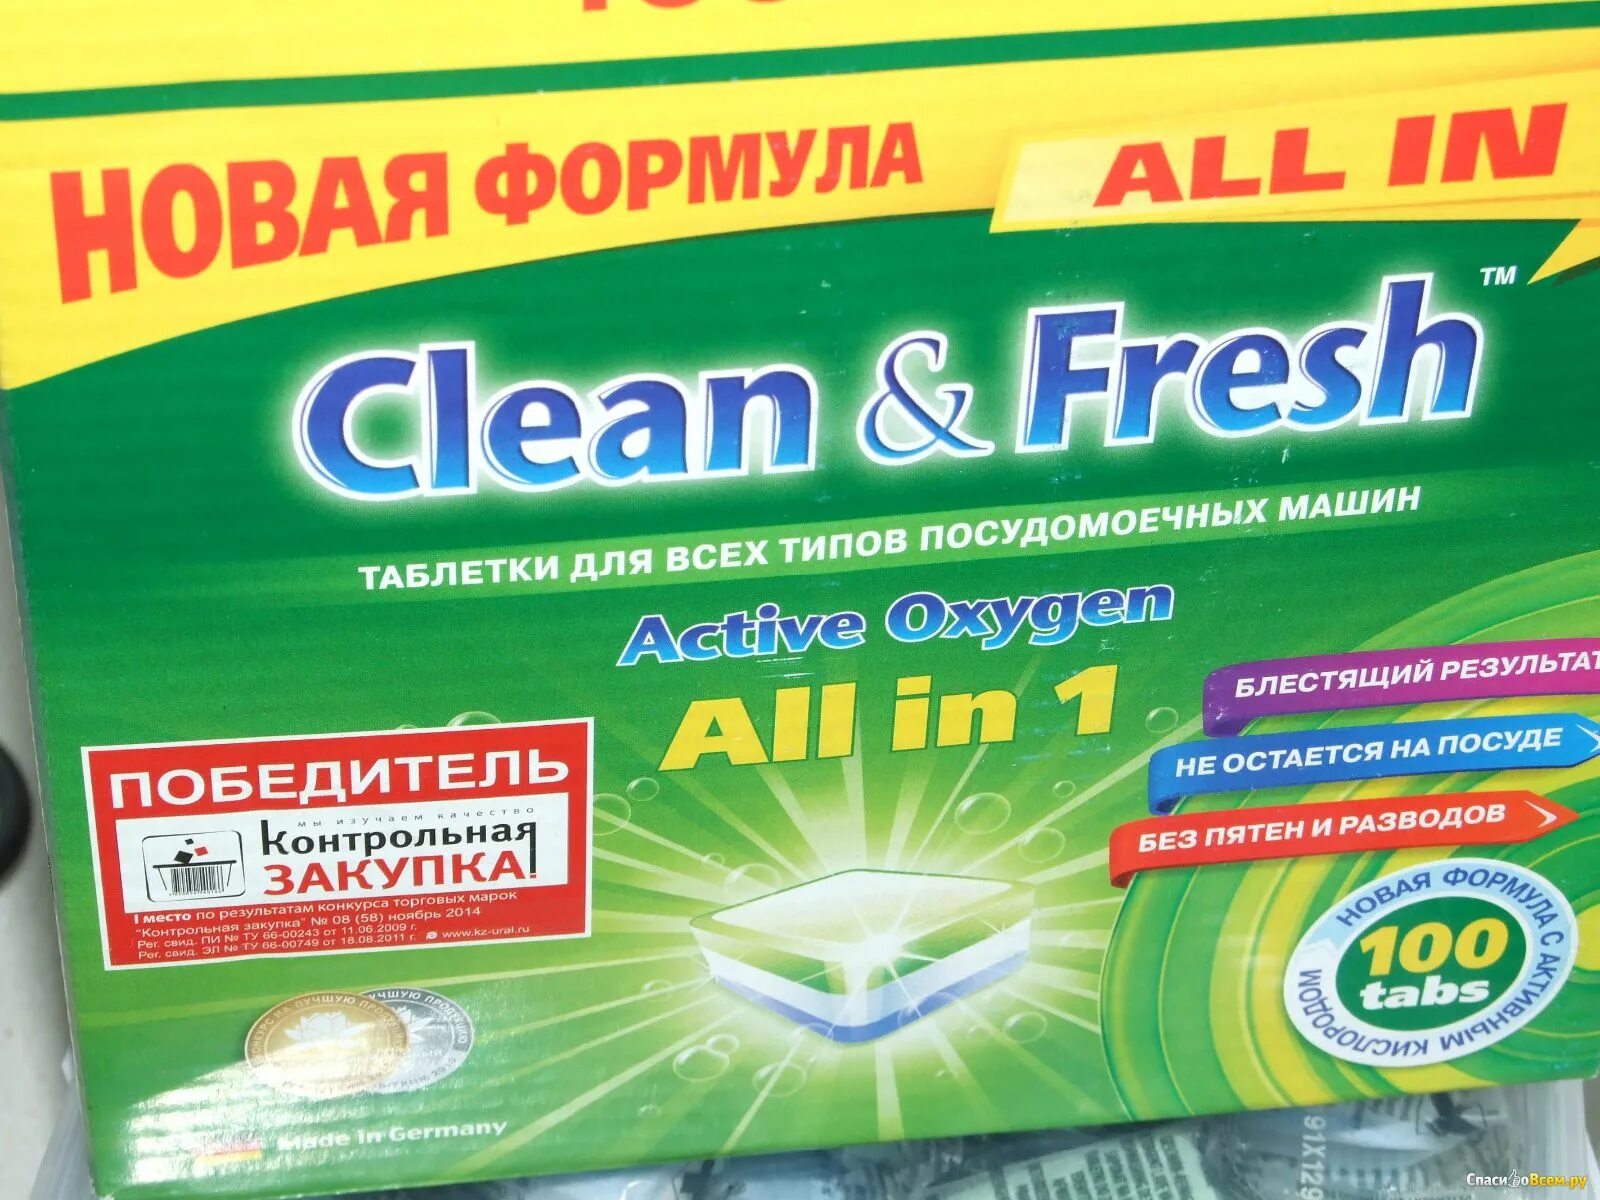 Таблетки для ПММ "clean&Fresh" allin1. Таблетки для ПММ "clean&Fresh" all in 1. Clean Fresh таблетки для посудомоечных машин. Таблетки для посудомоечной машины Клин энд Фреш. Clean fresh all in 1